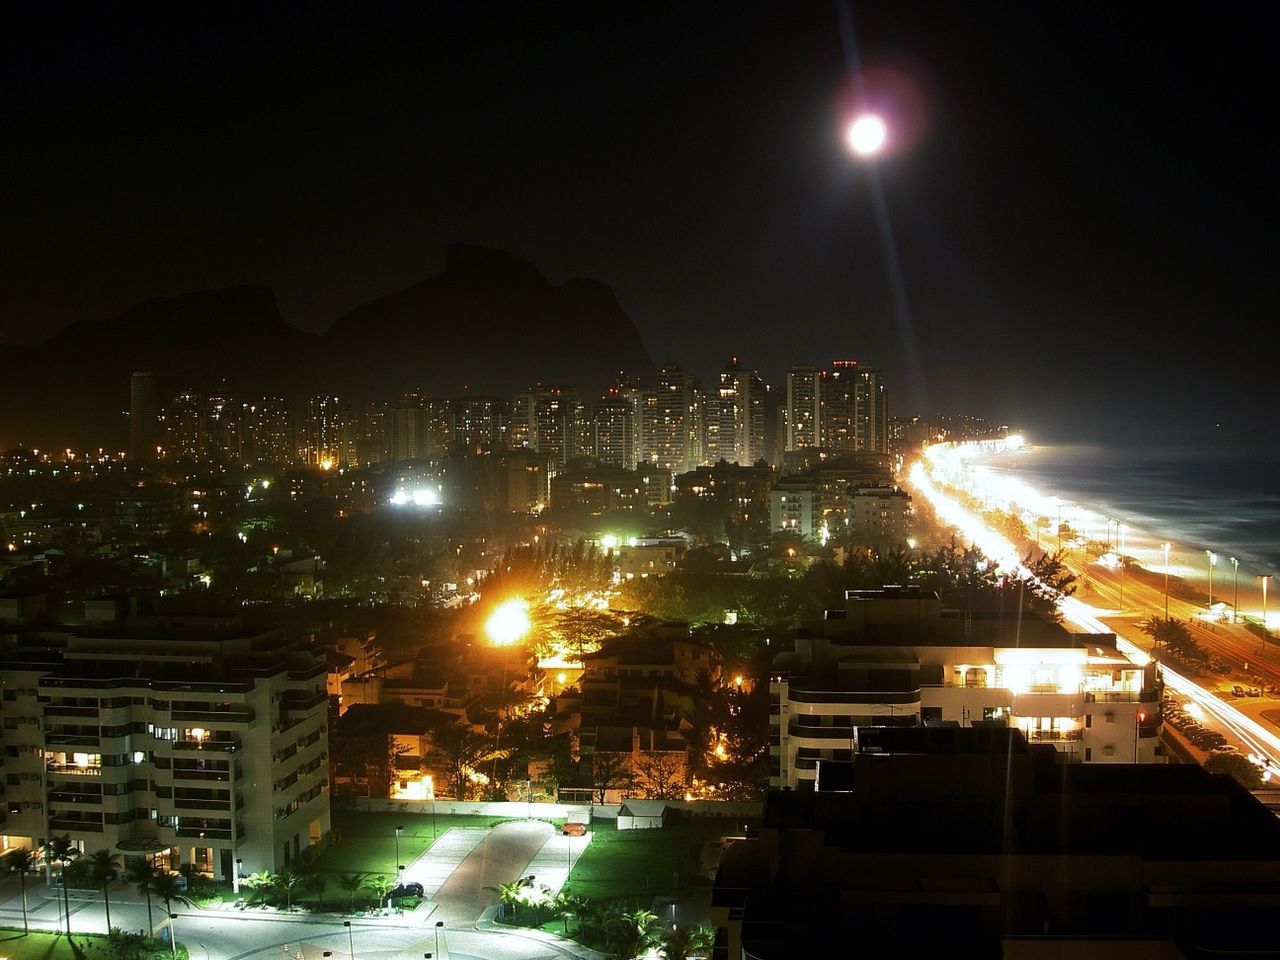 High angle shot of illuminated cityscape